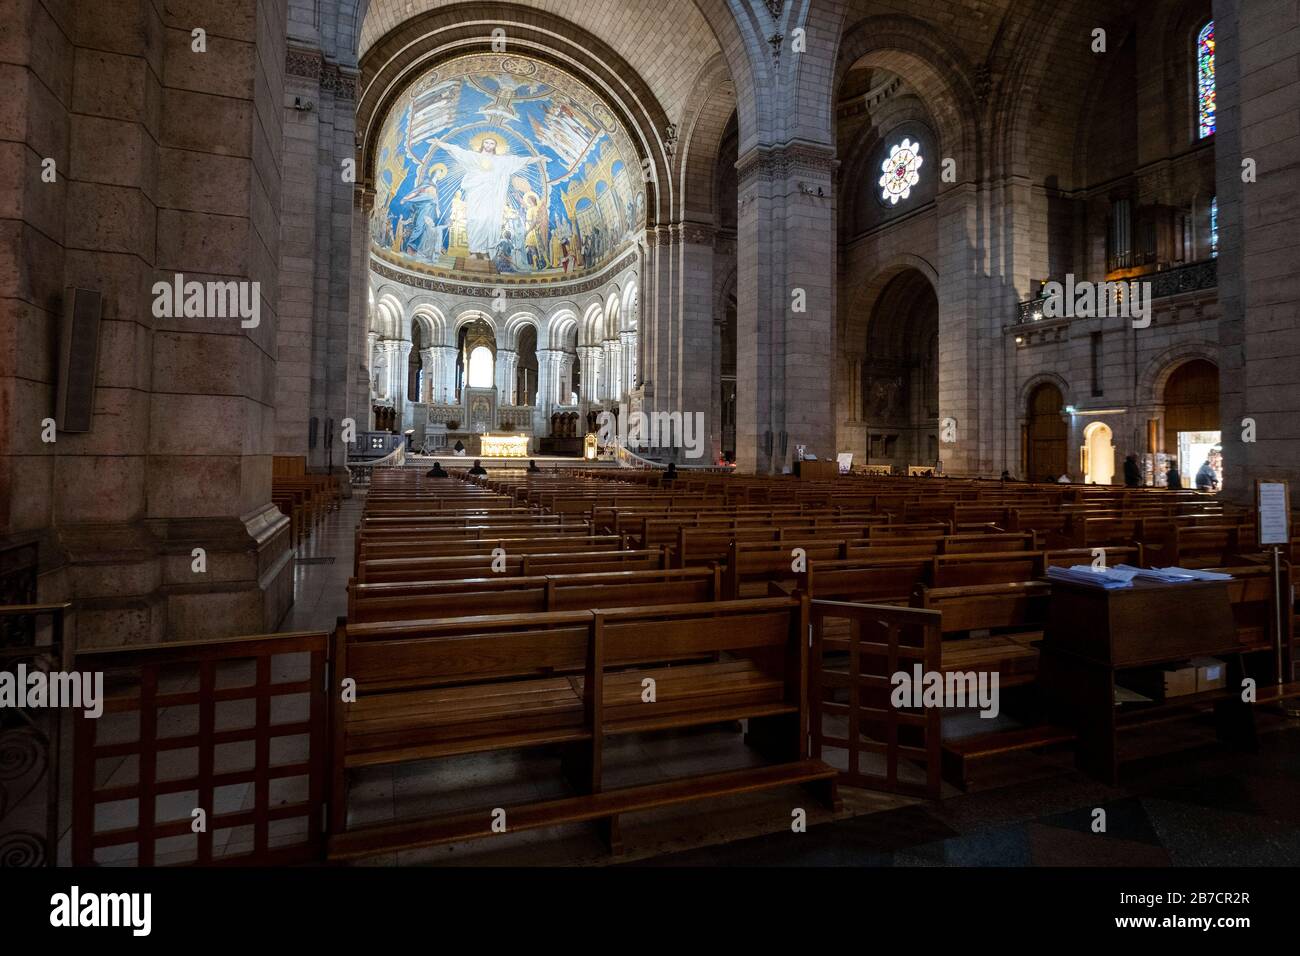 Nave and main altar inside the Basilique du Sacre Coeur aka Basilica of the Sacred Heart of Paris in Paris, France, Europe Stock Photo